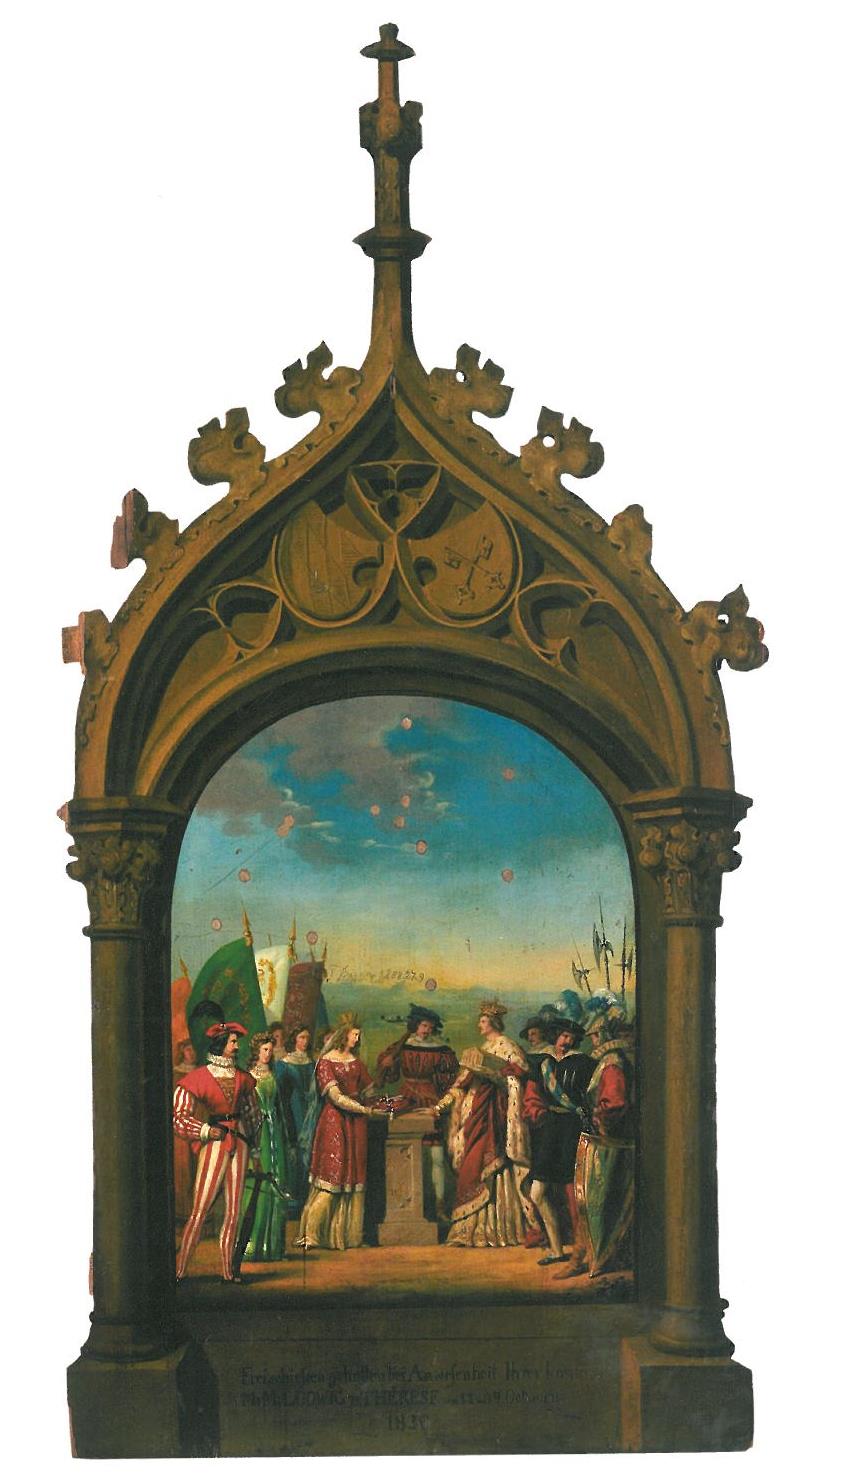 Ratisbona presenting King Ludwig I the keys to the city. Hans Kranzberger, Regensburg, 1830, shooting target.